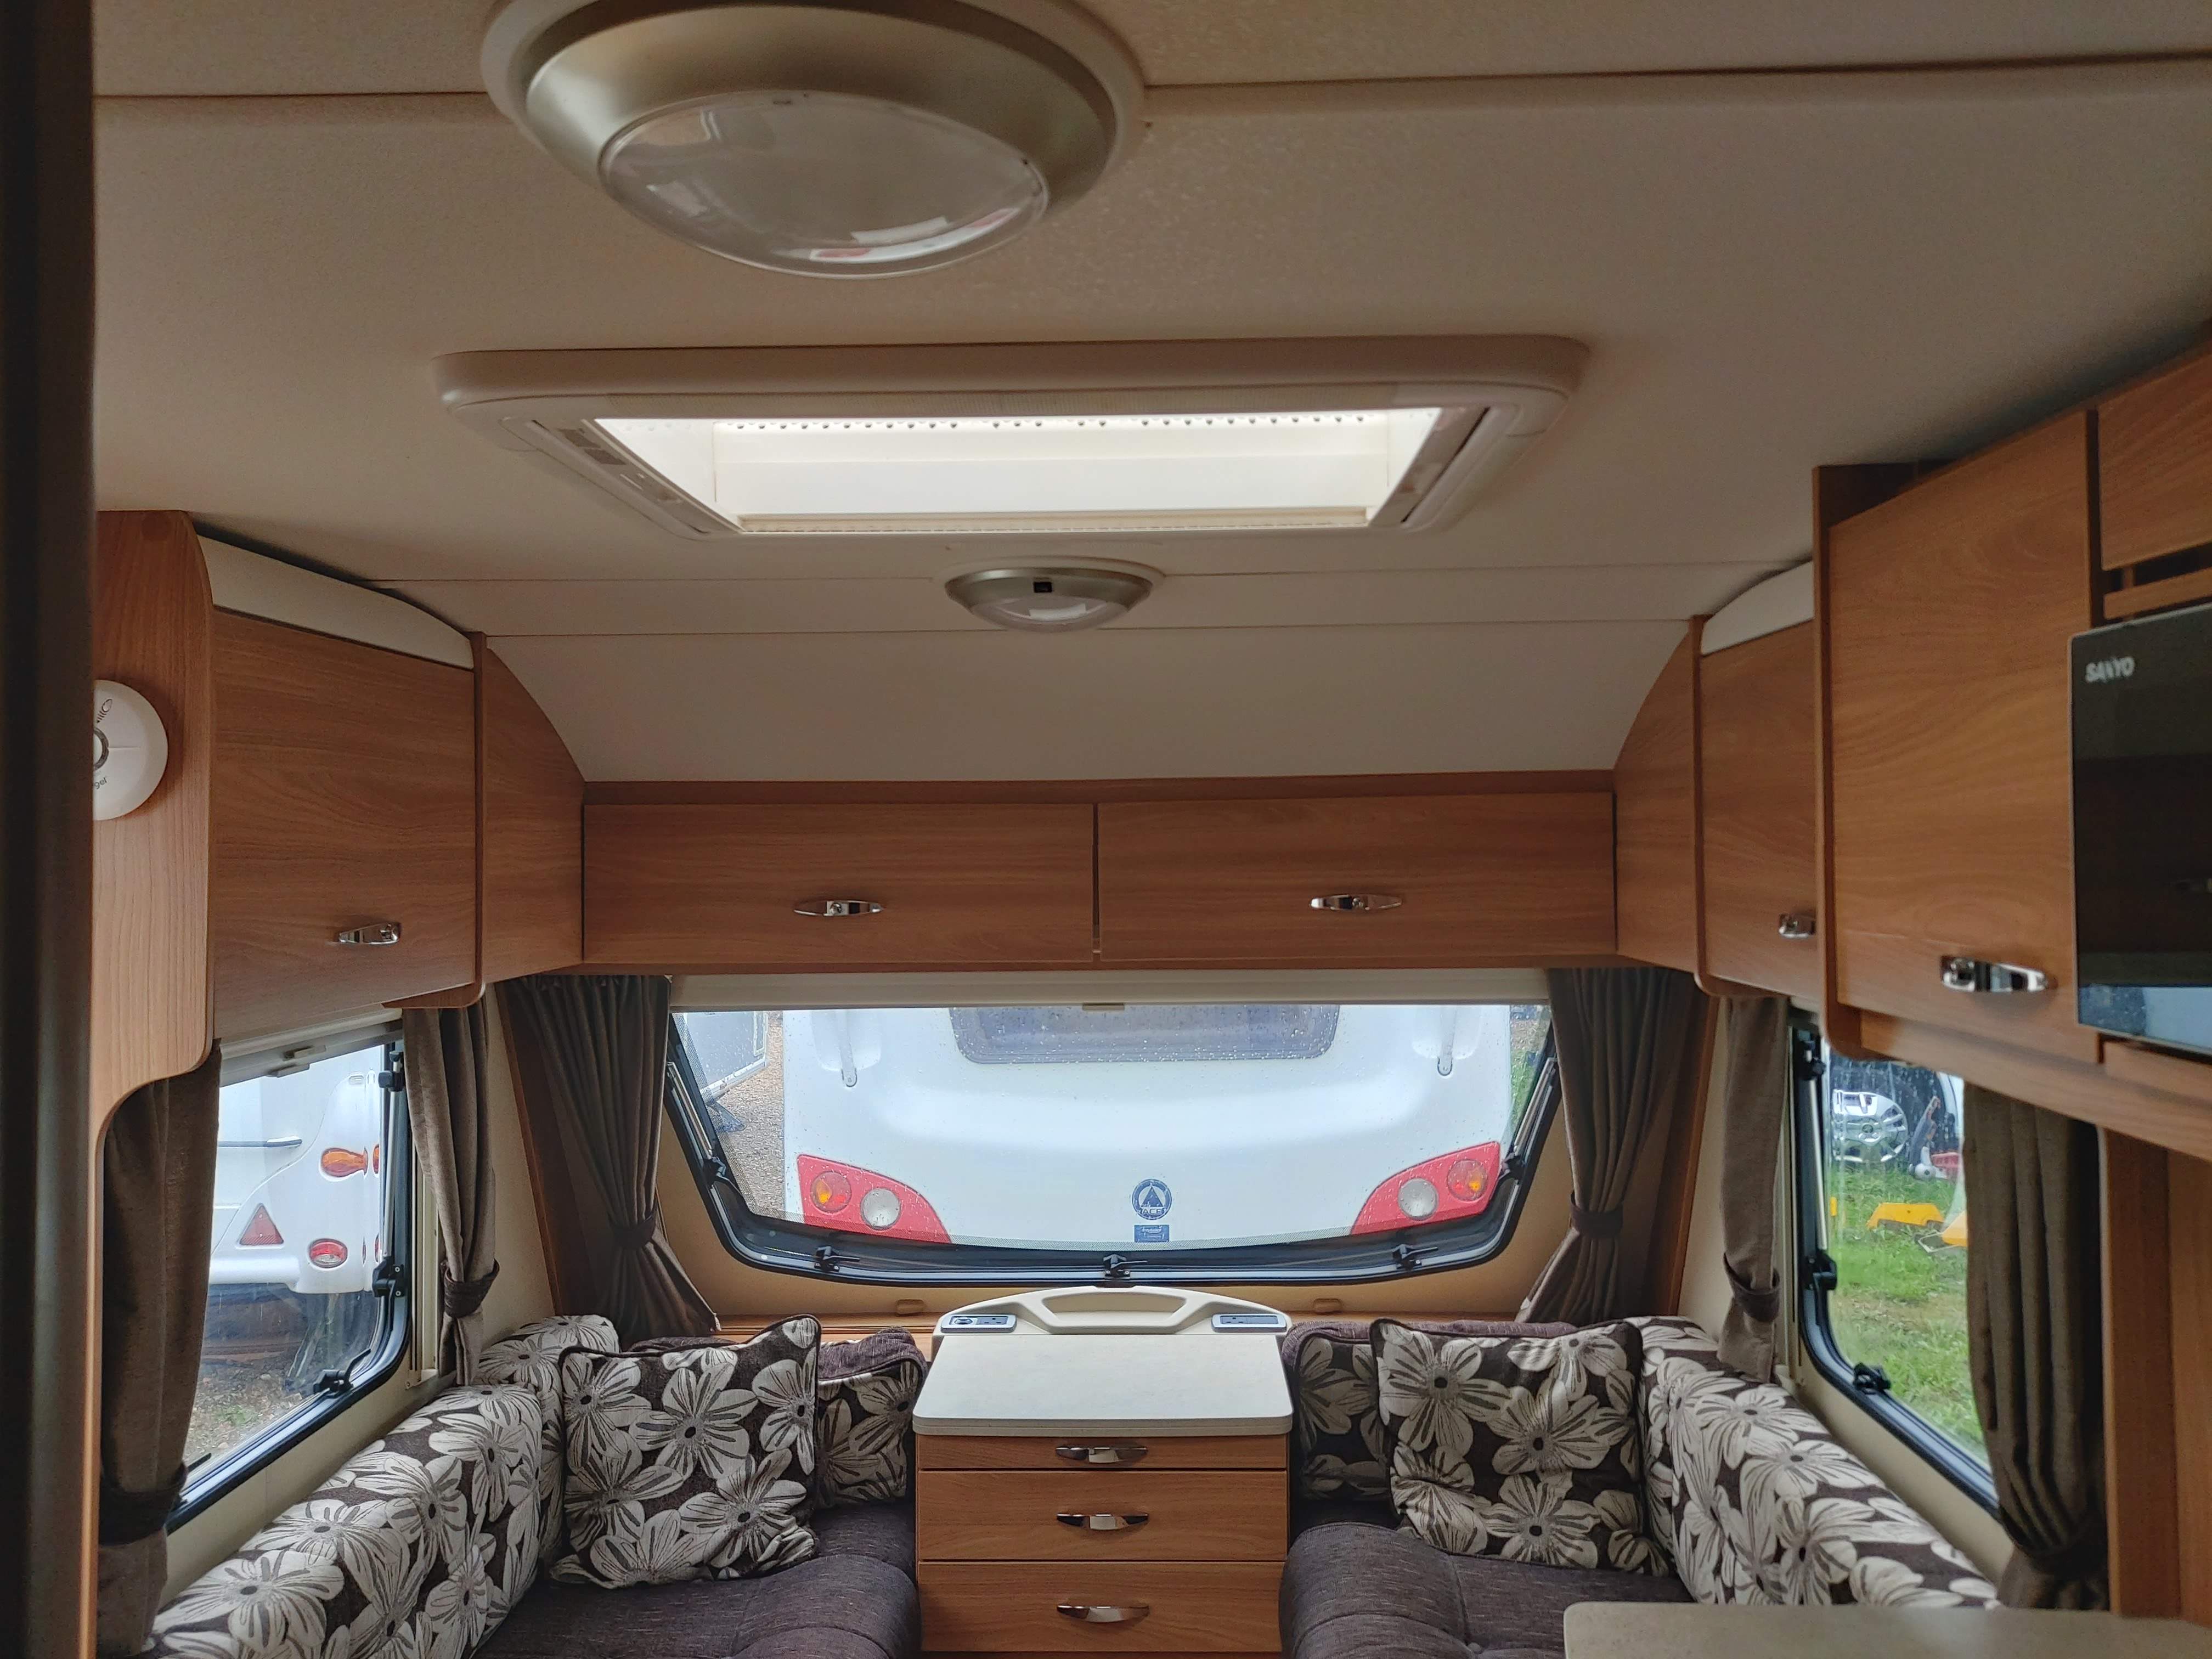 2012 Sprite Major 4, 4 Berth End Washroom Lightweight Caravan, Motor Mover